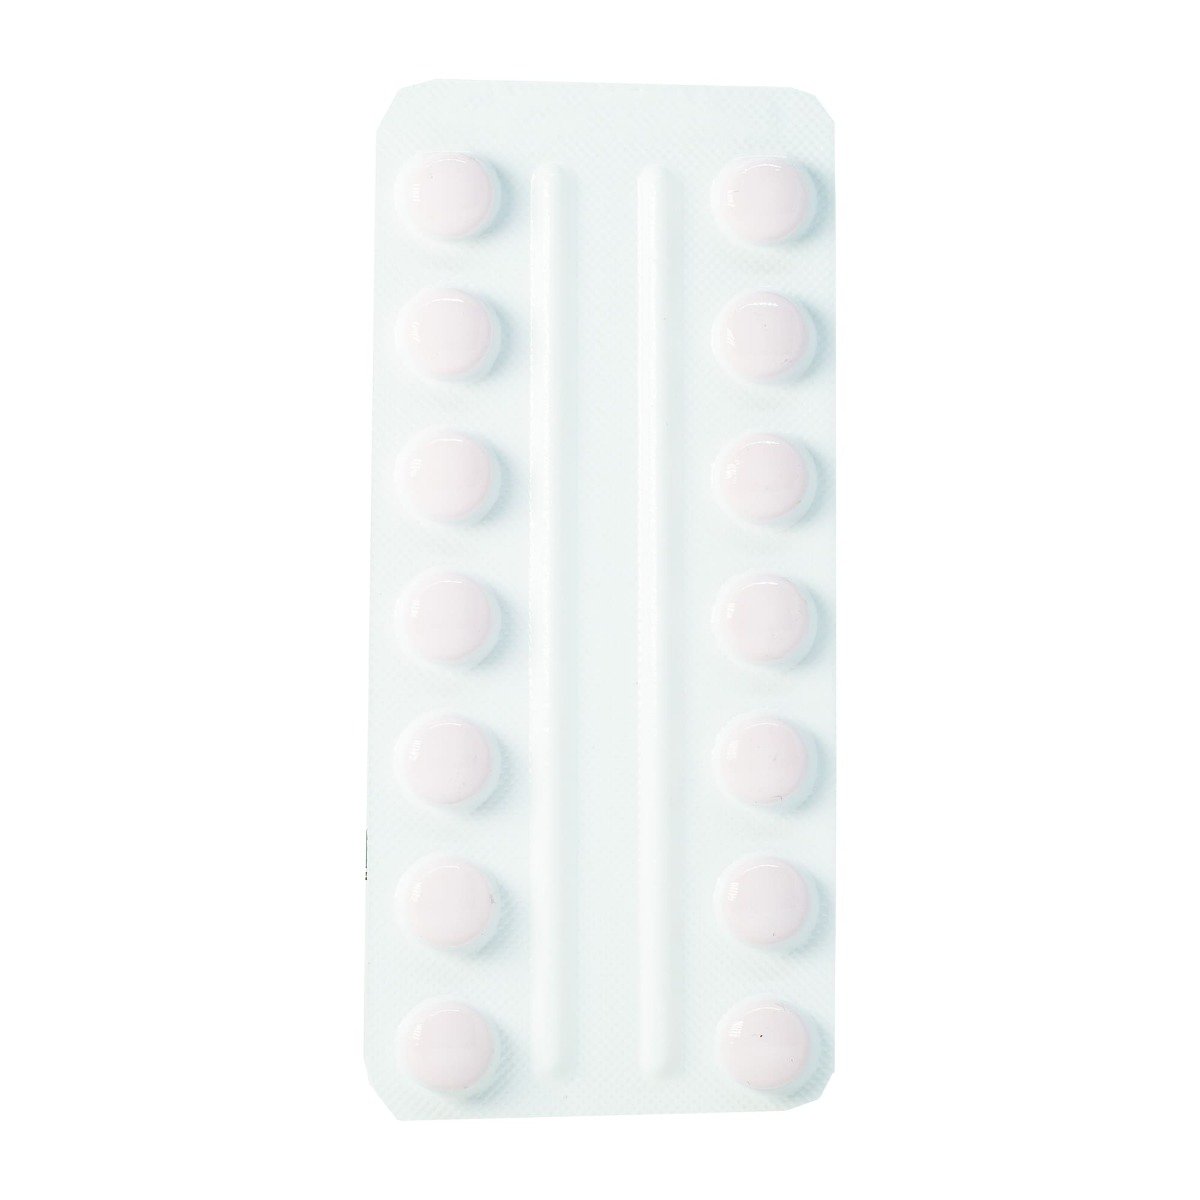 Atoreza 10 mg-40 mg - 28 Tablets - Bloom Pharmacy